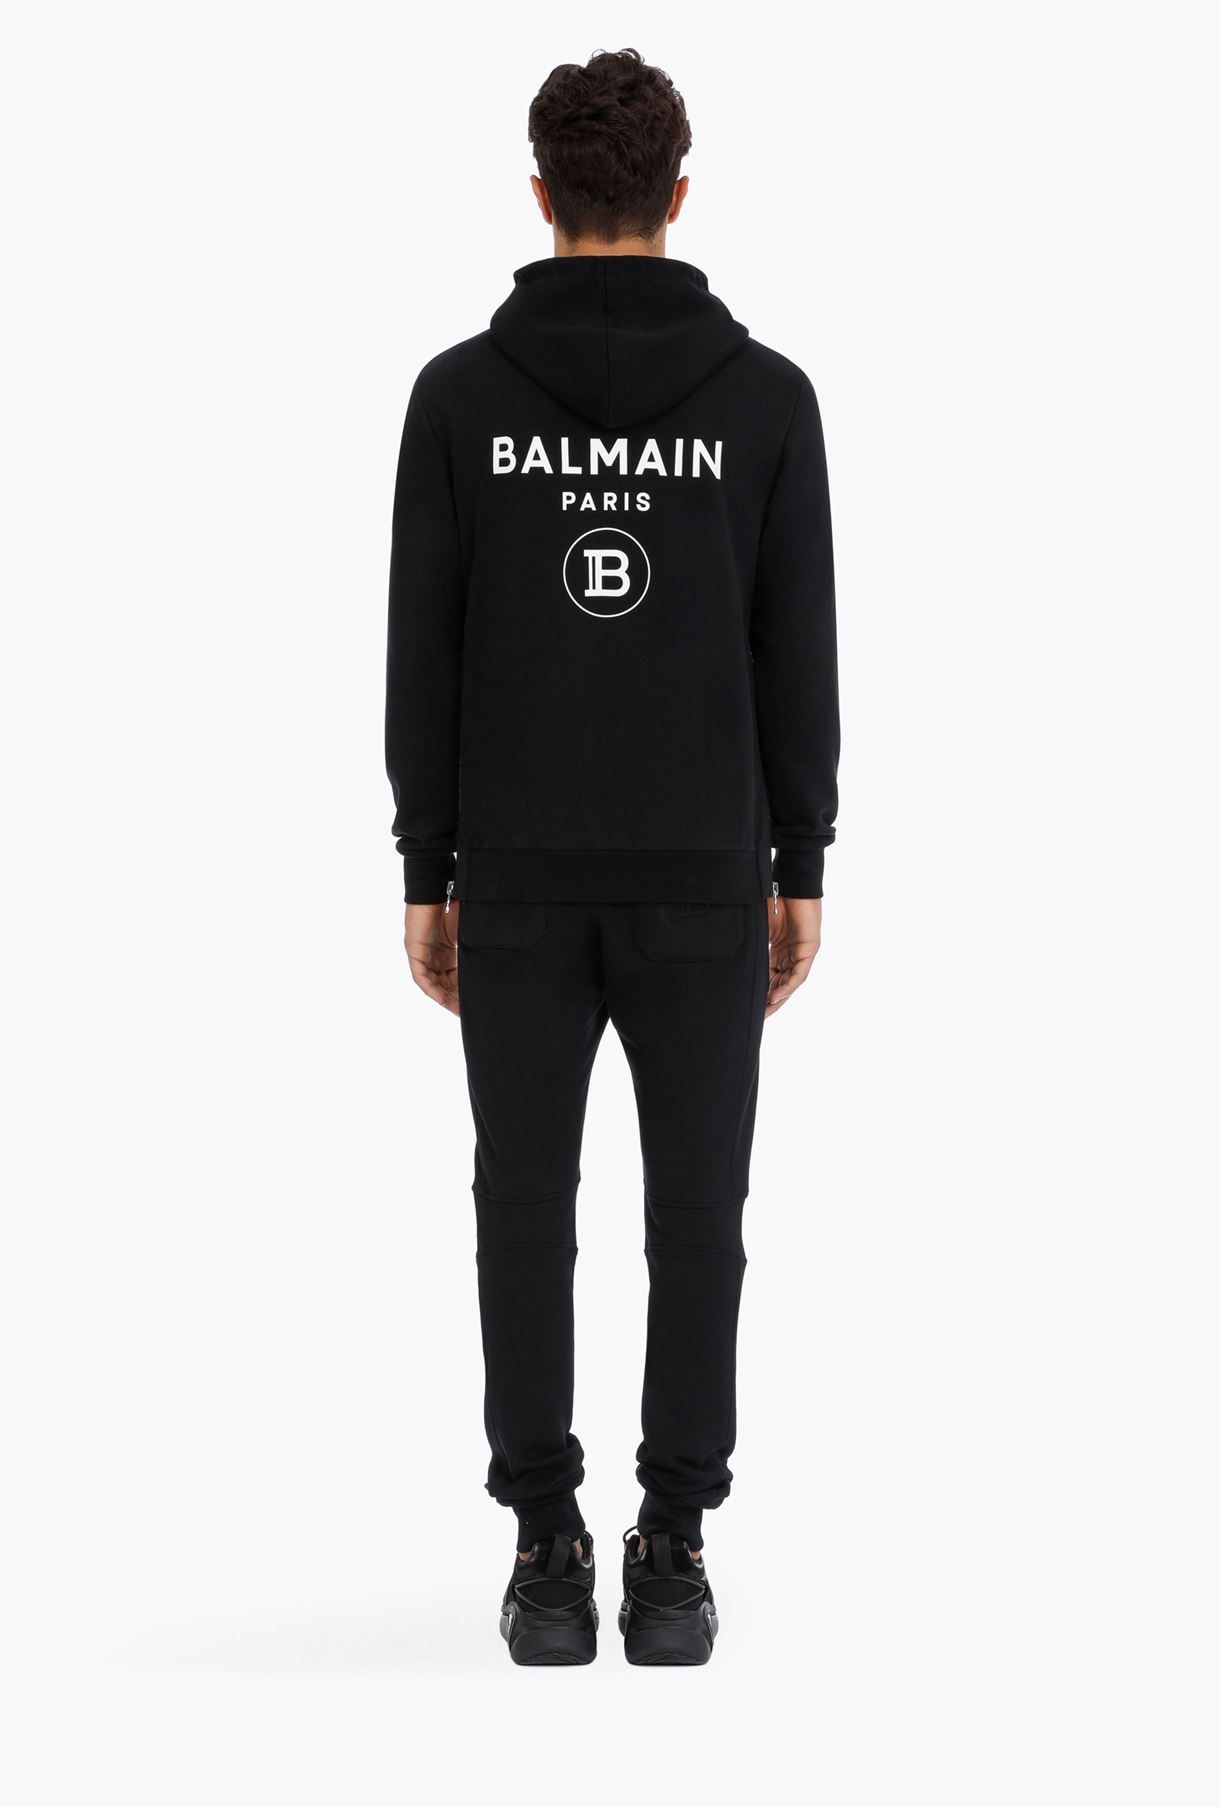 BALMAIN - 【ラスト1点】Black cotton sweatshirt with white Balmain